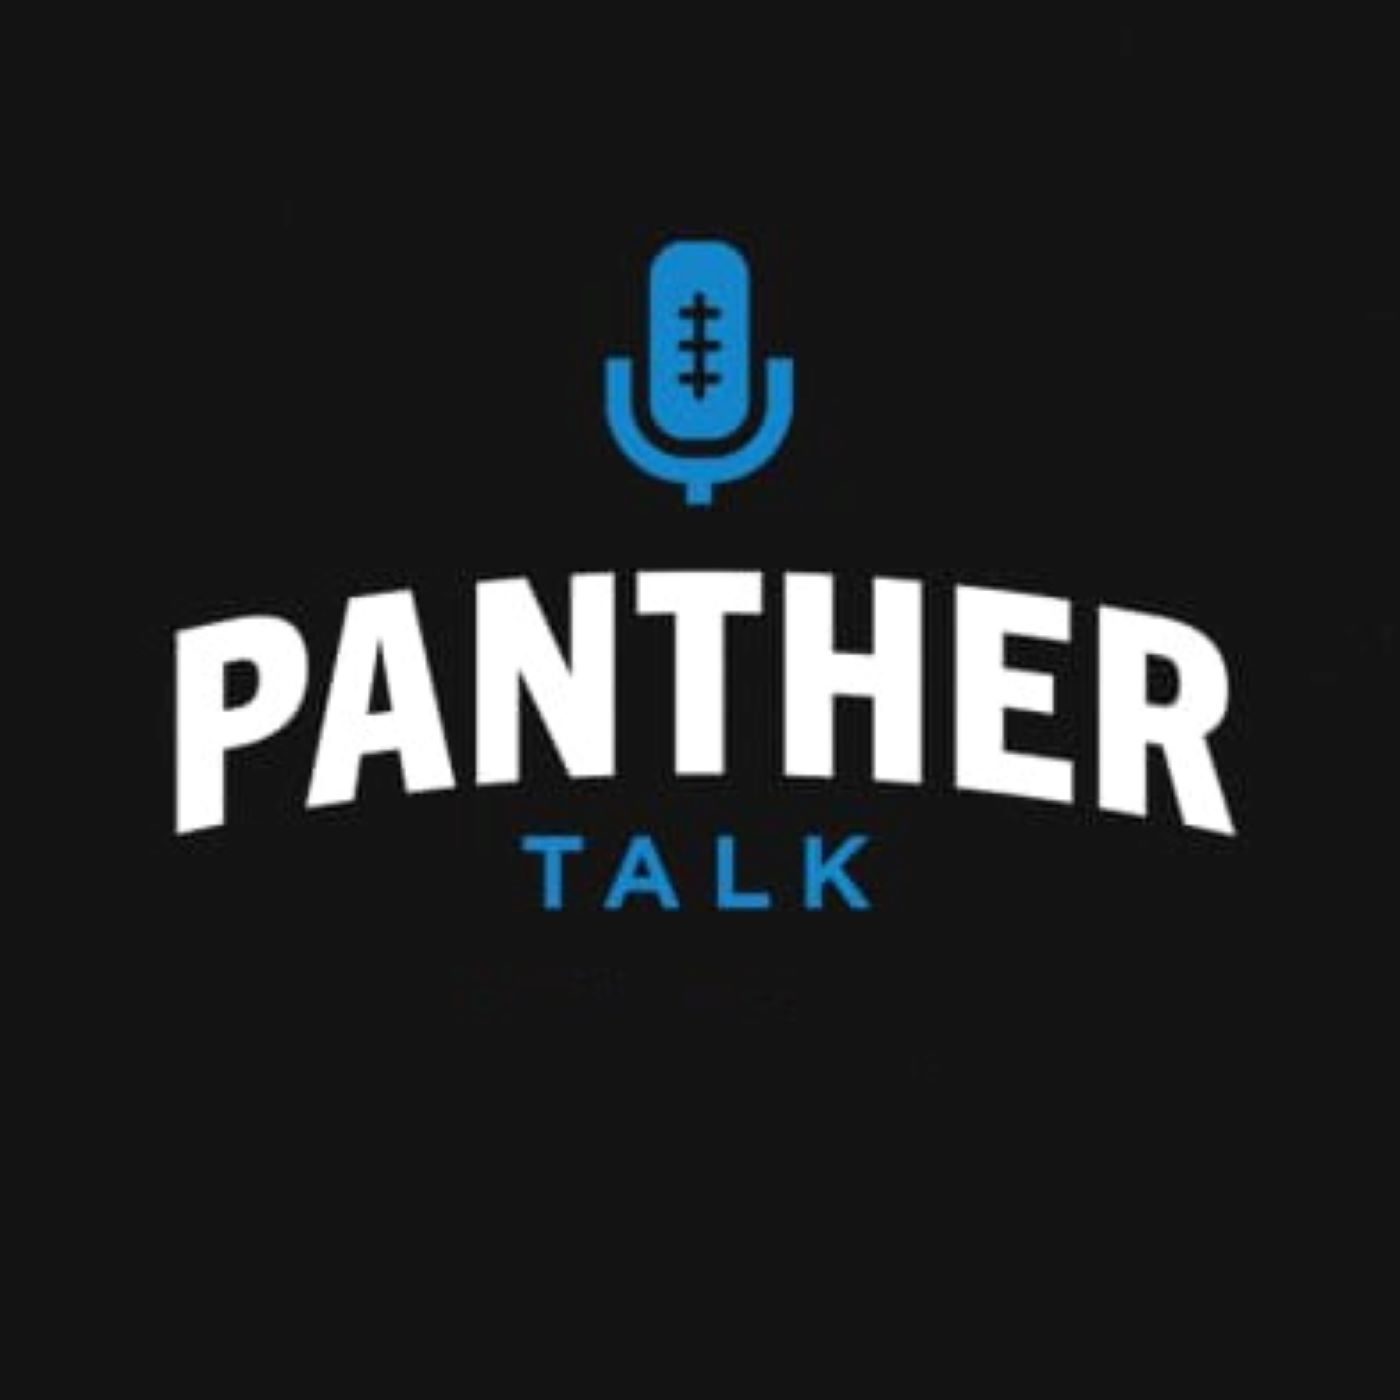 Panther Talk (November 6th)